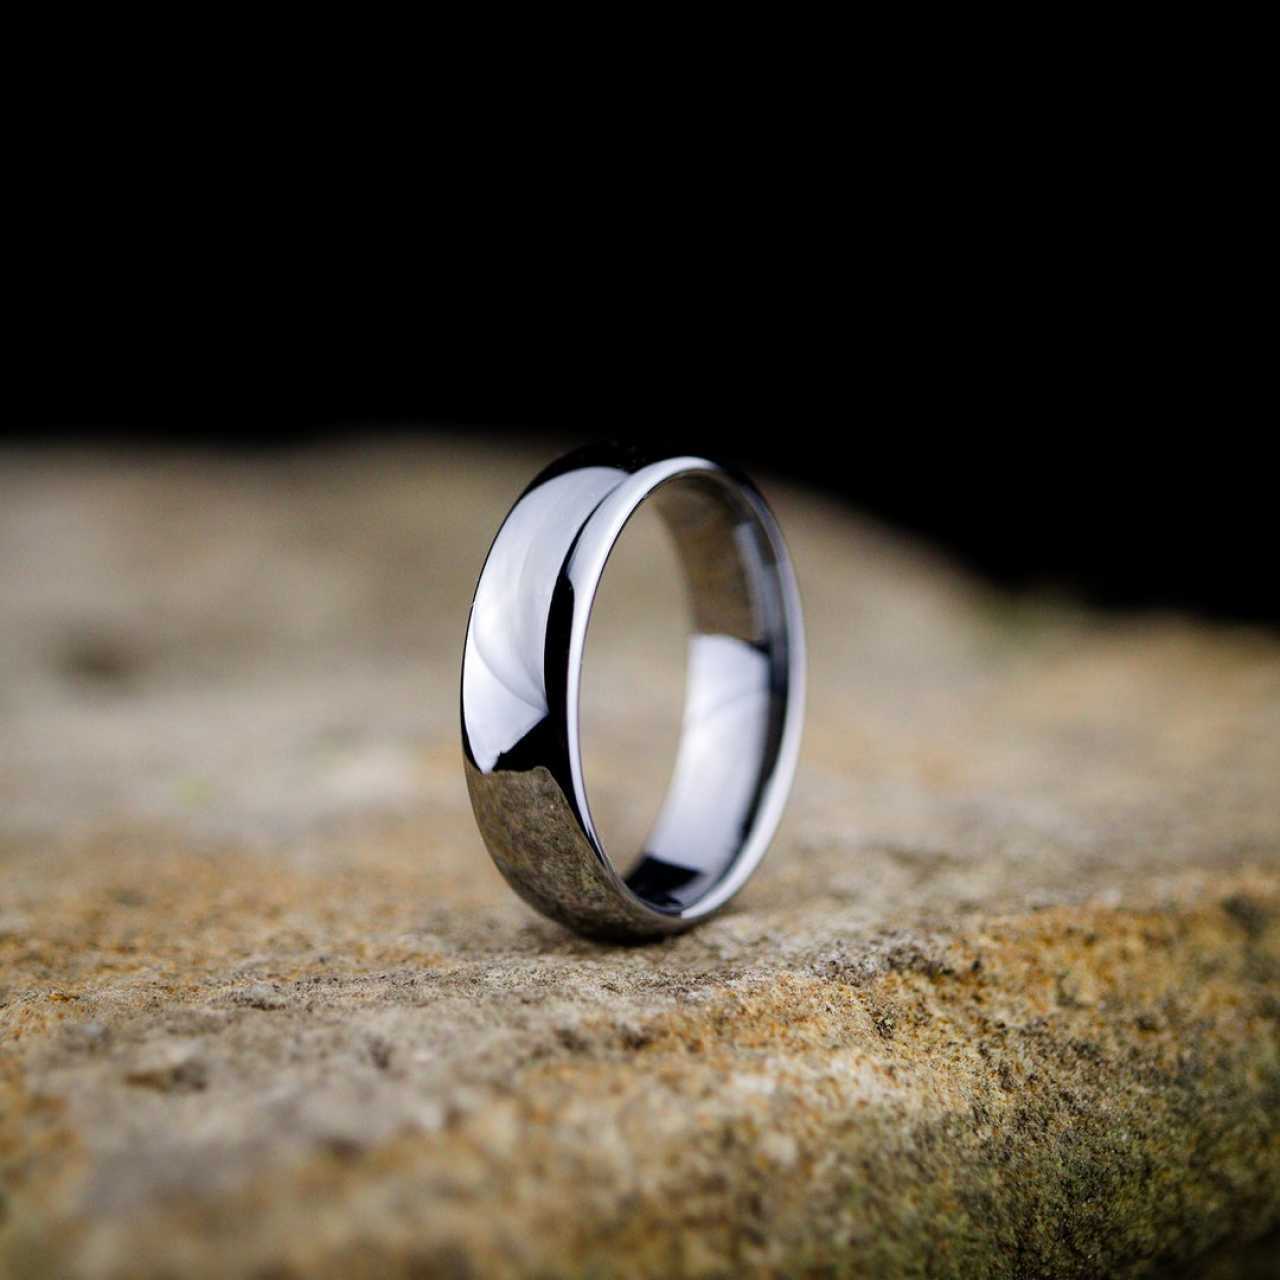 Flinn & Steel rings